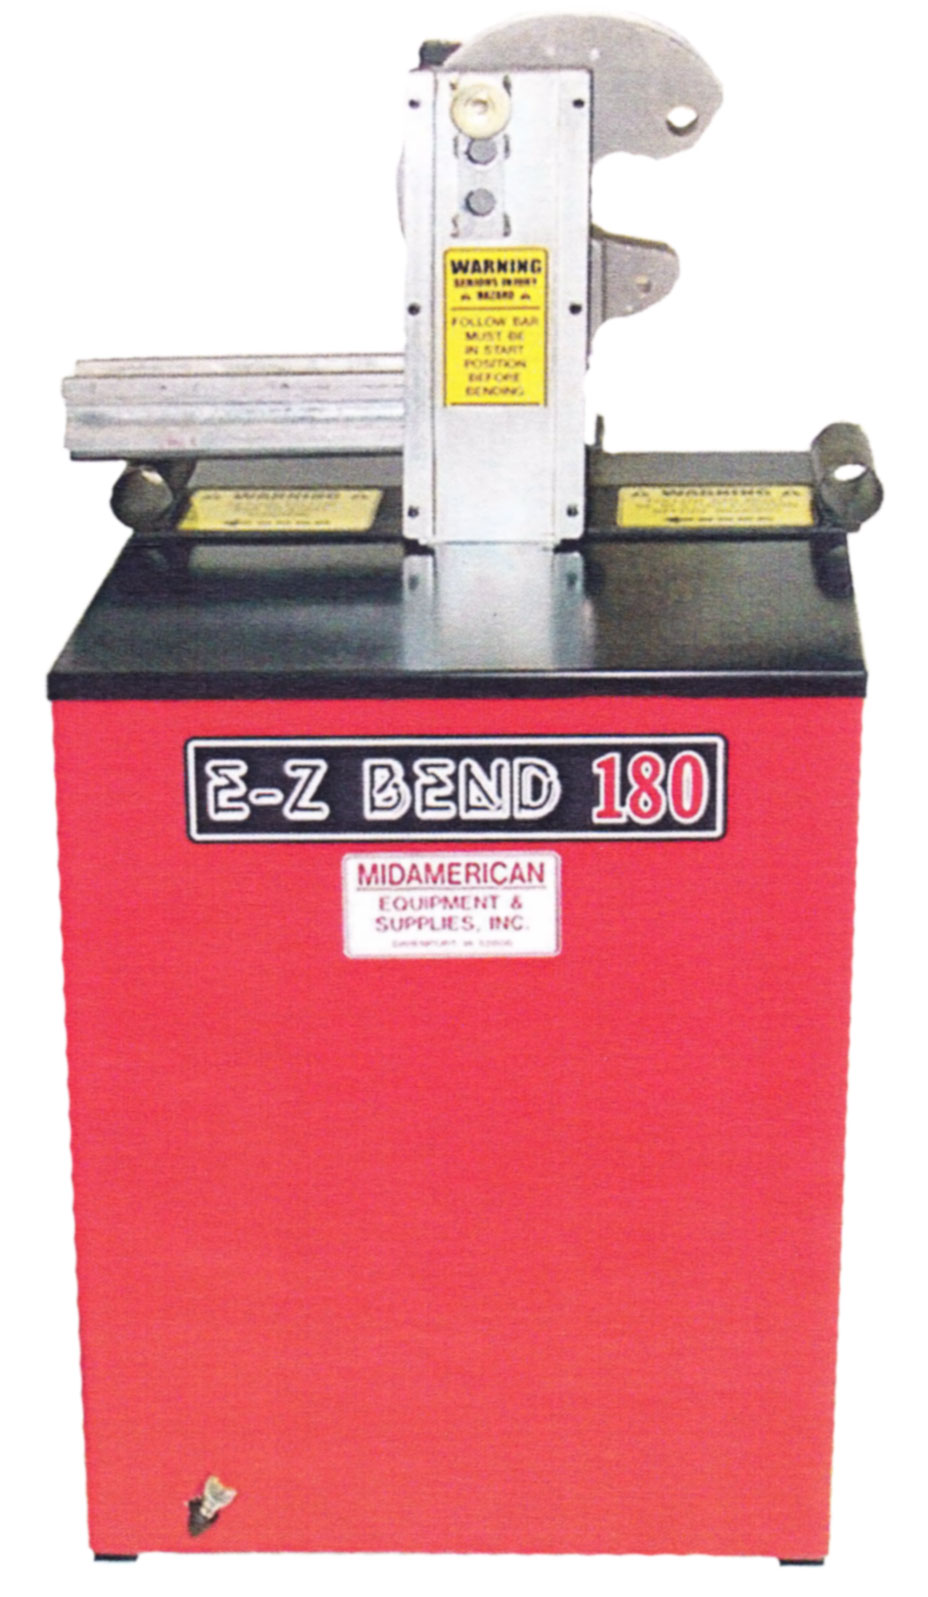 E-Z bend 180 Tubing Bender